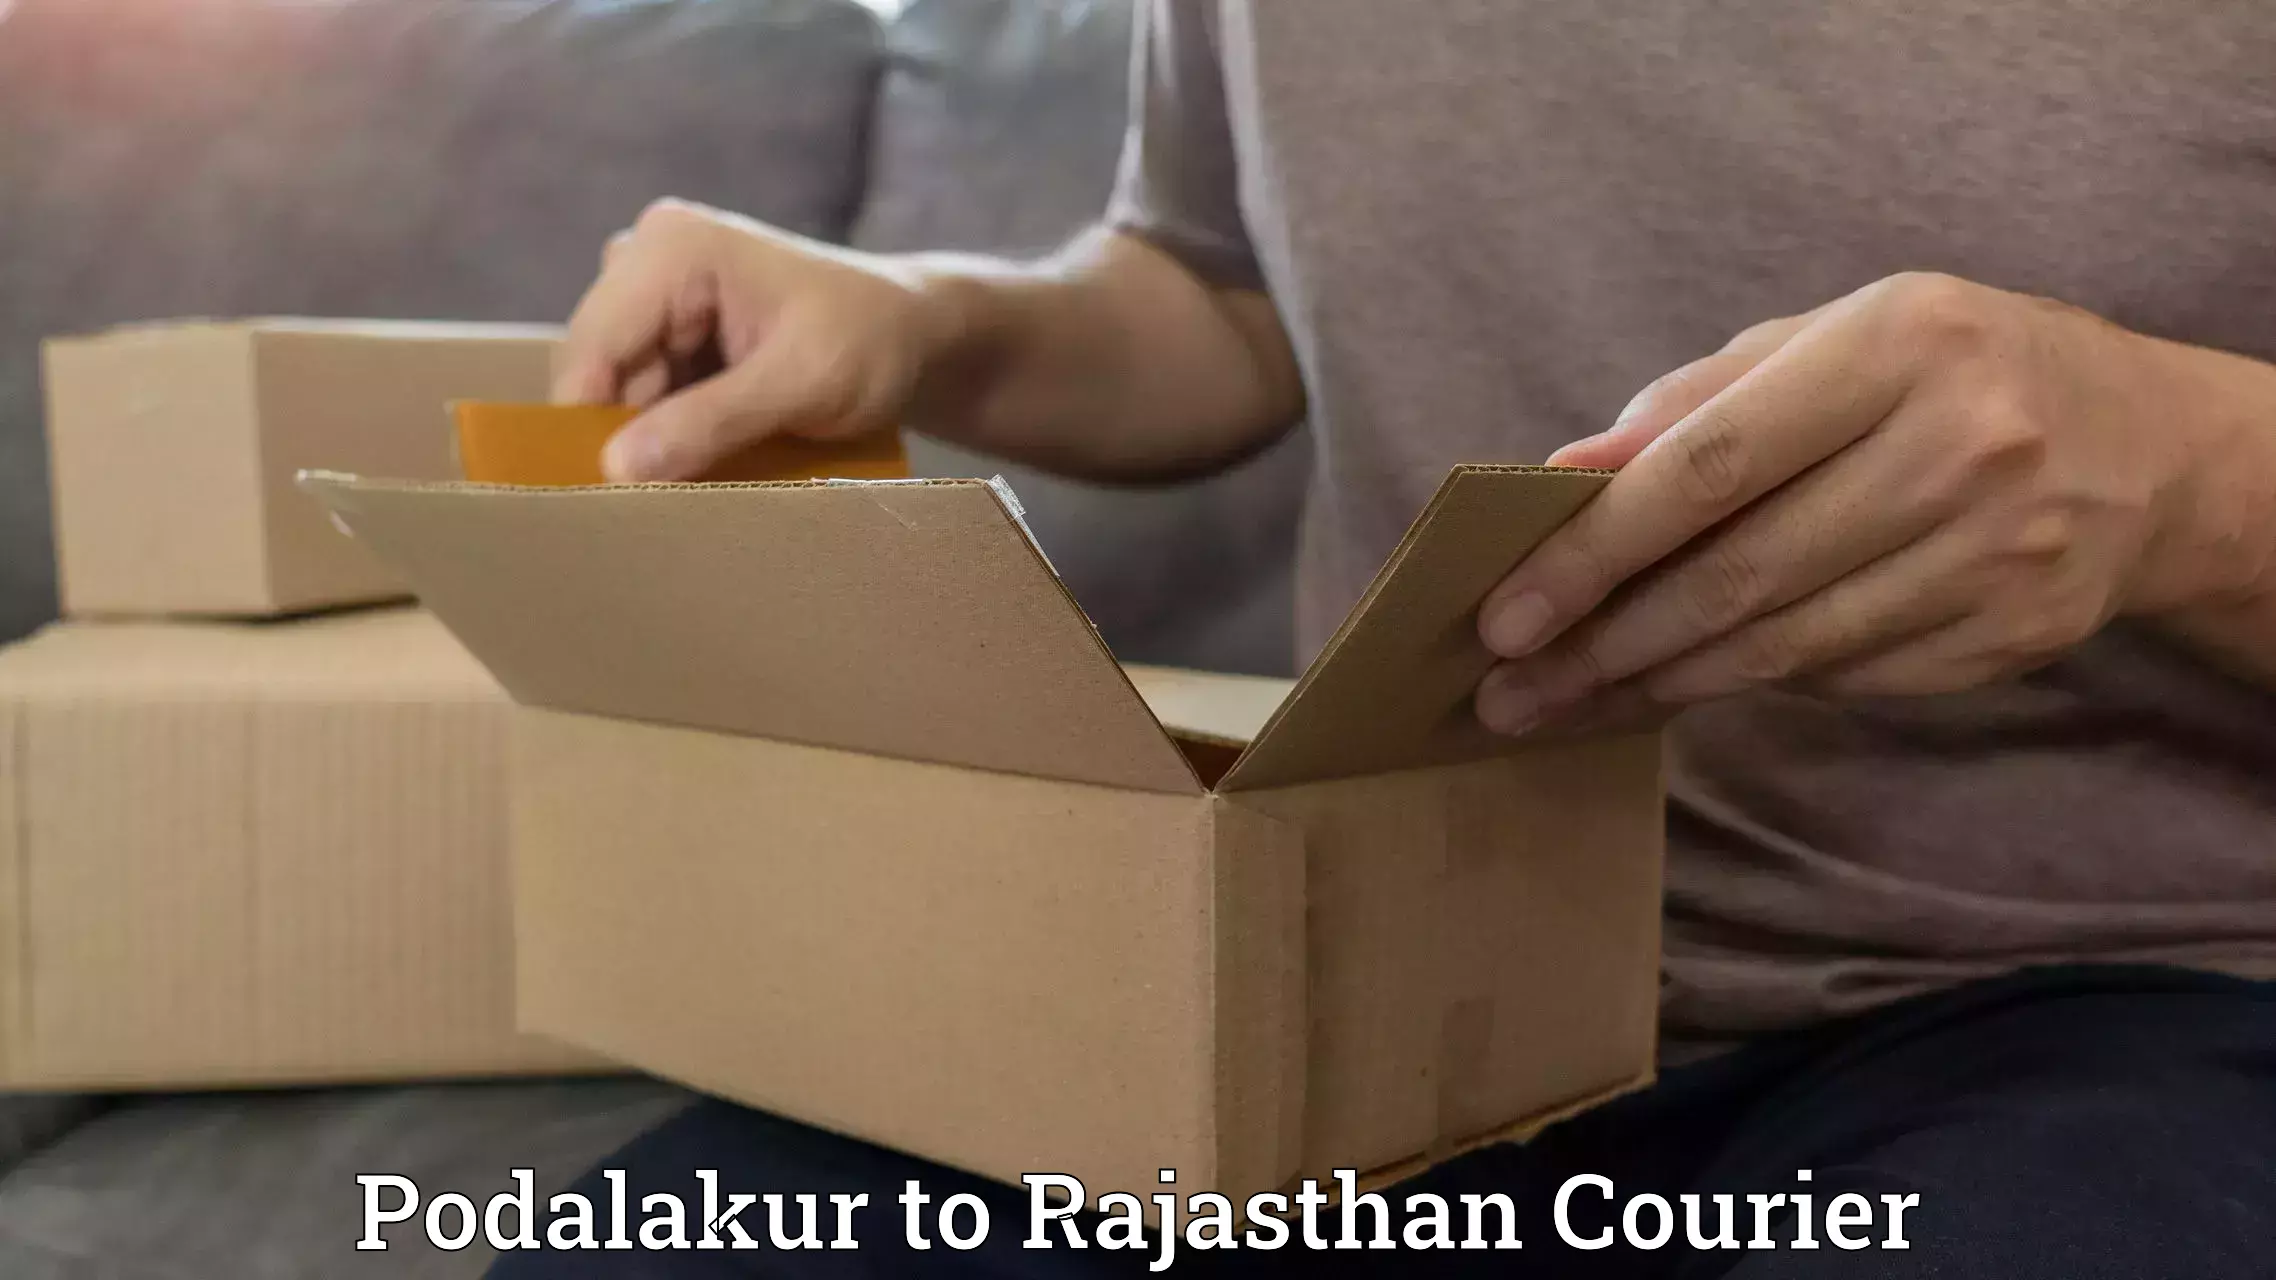 Courier service comparison Podalakur to Jodhpur